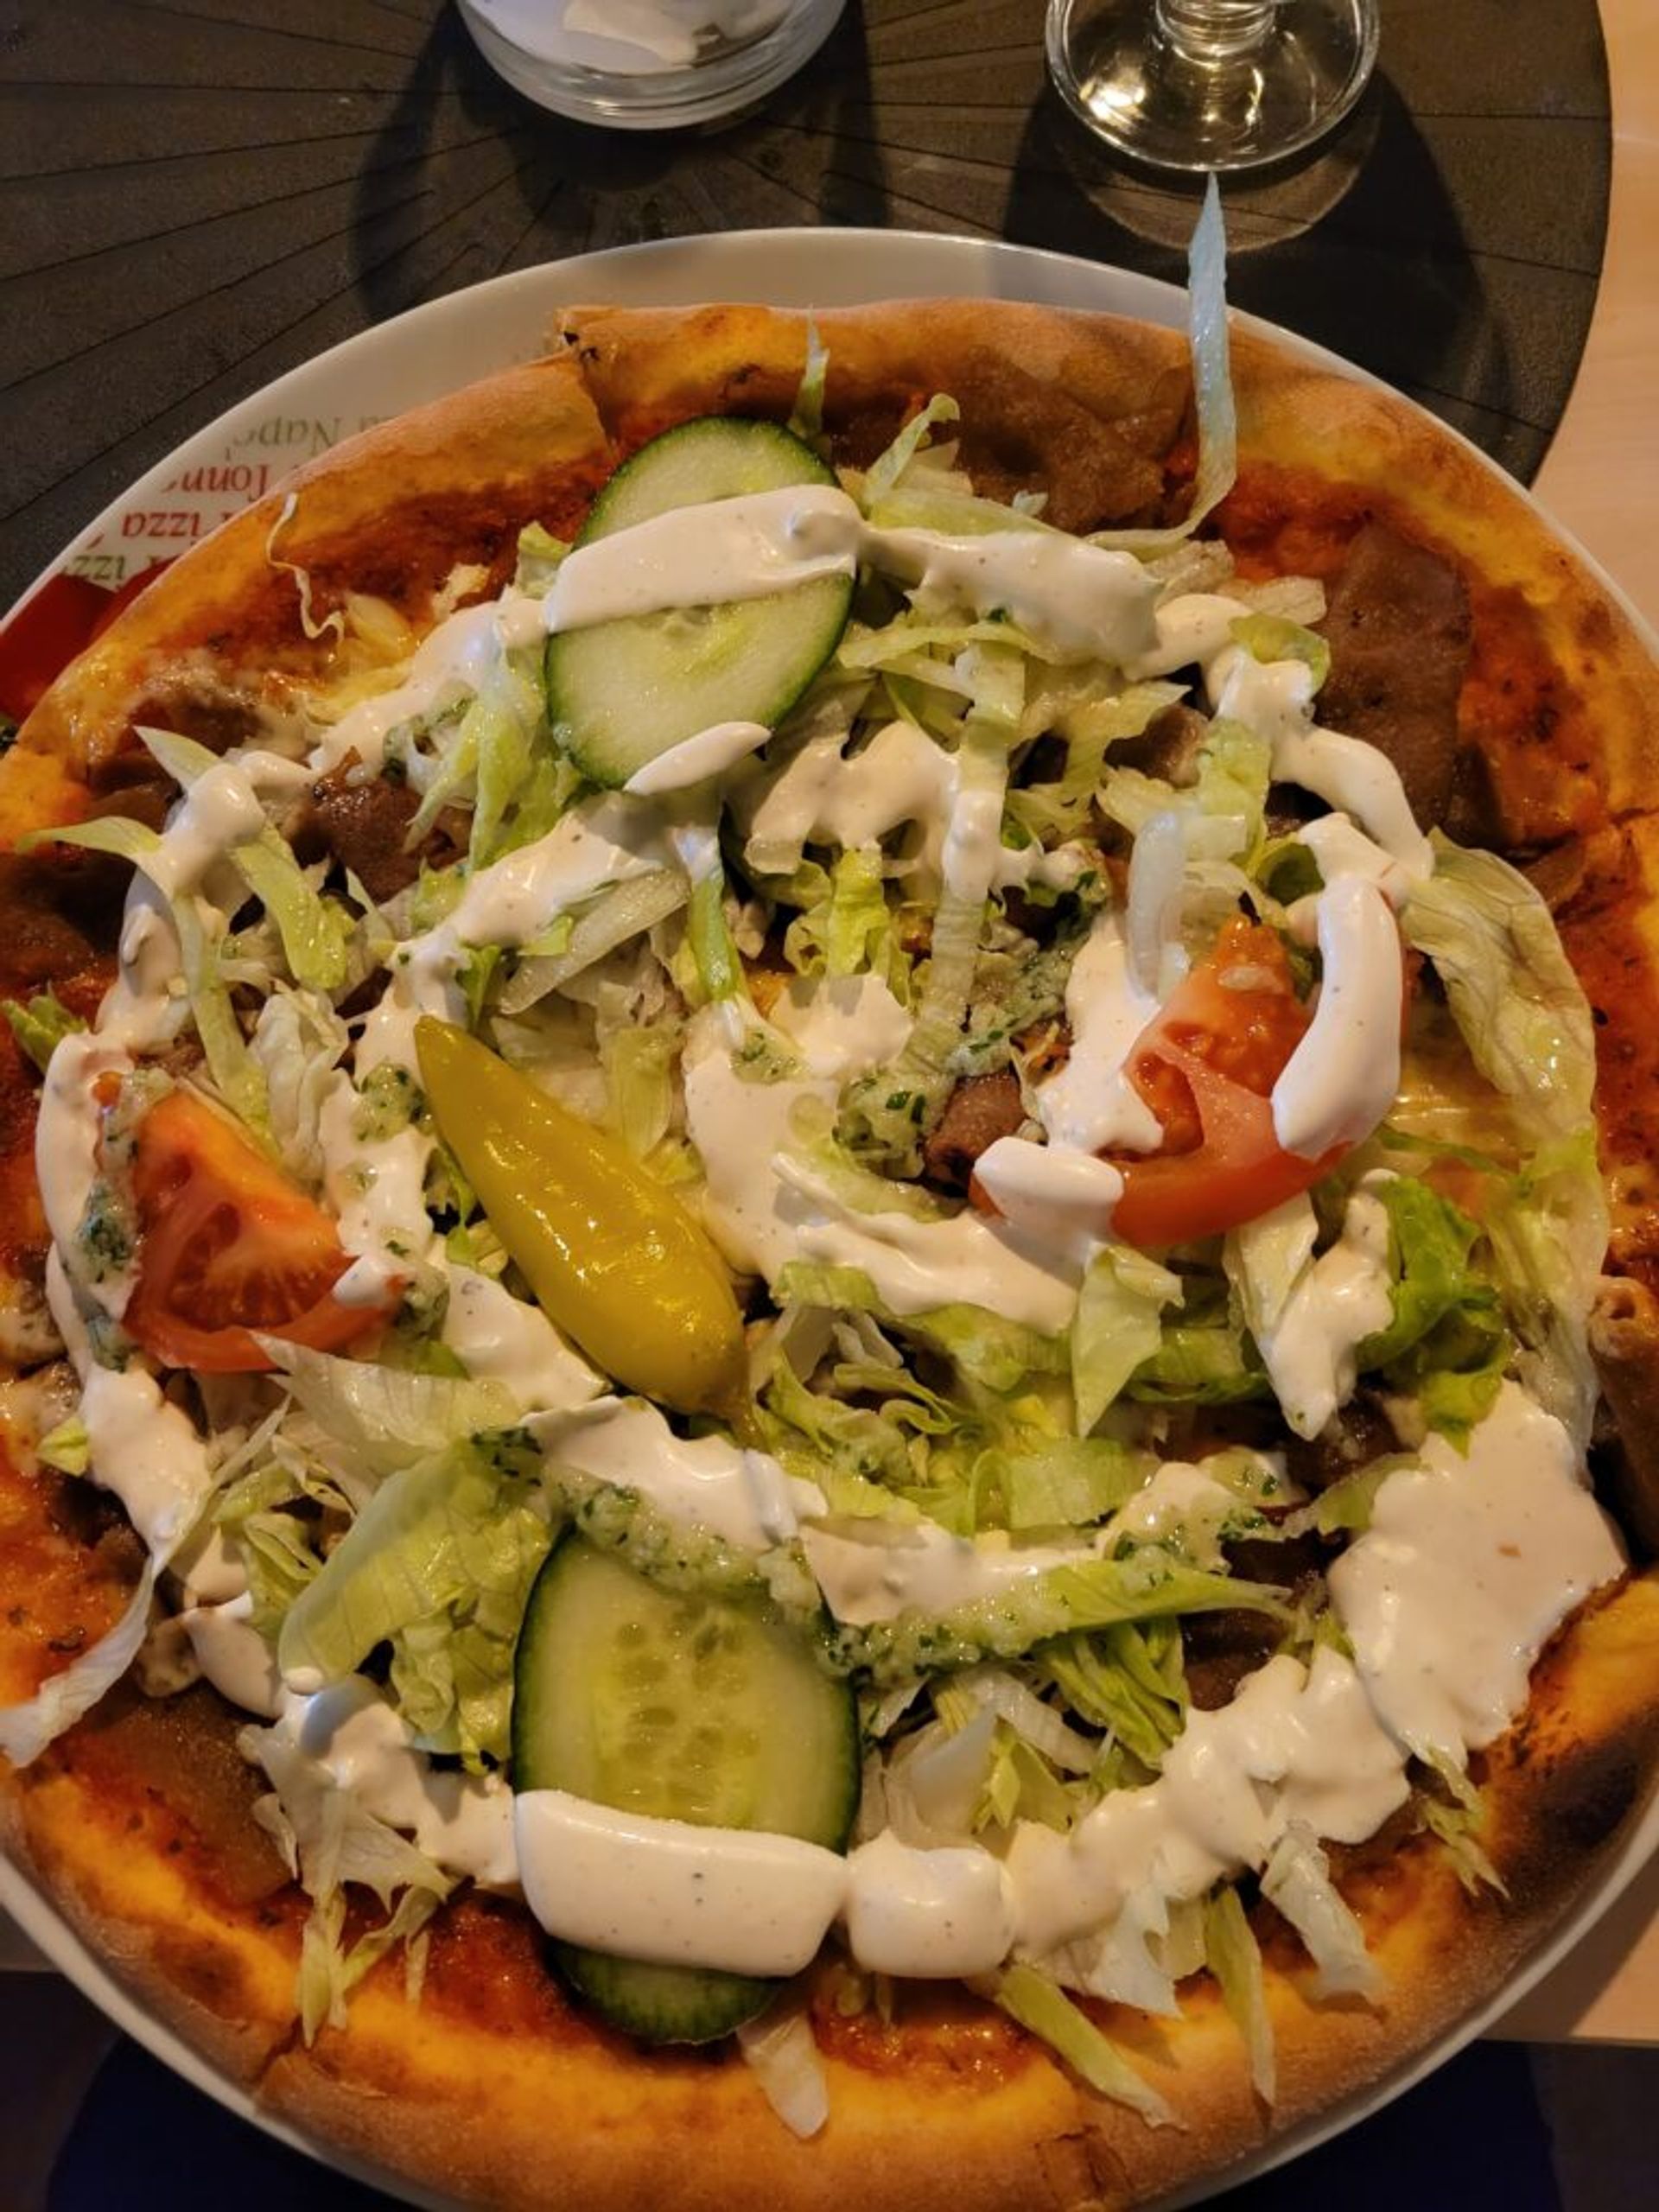 Kebab pizza with cucumbers, tomato, salad, kebab, and sauce.